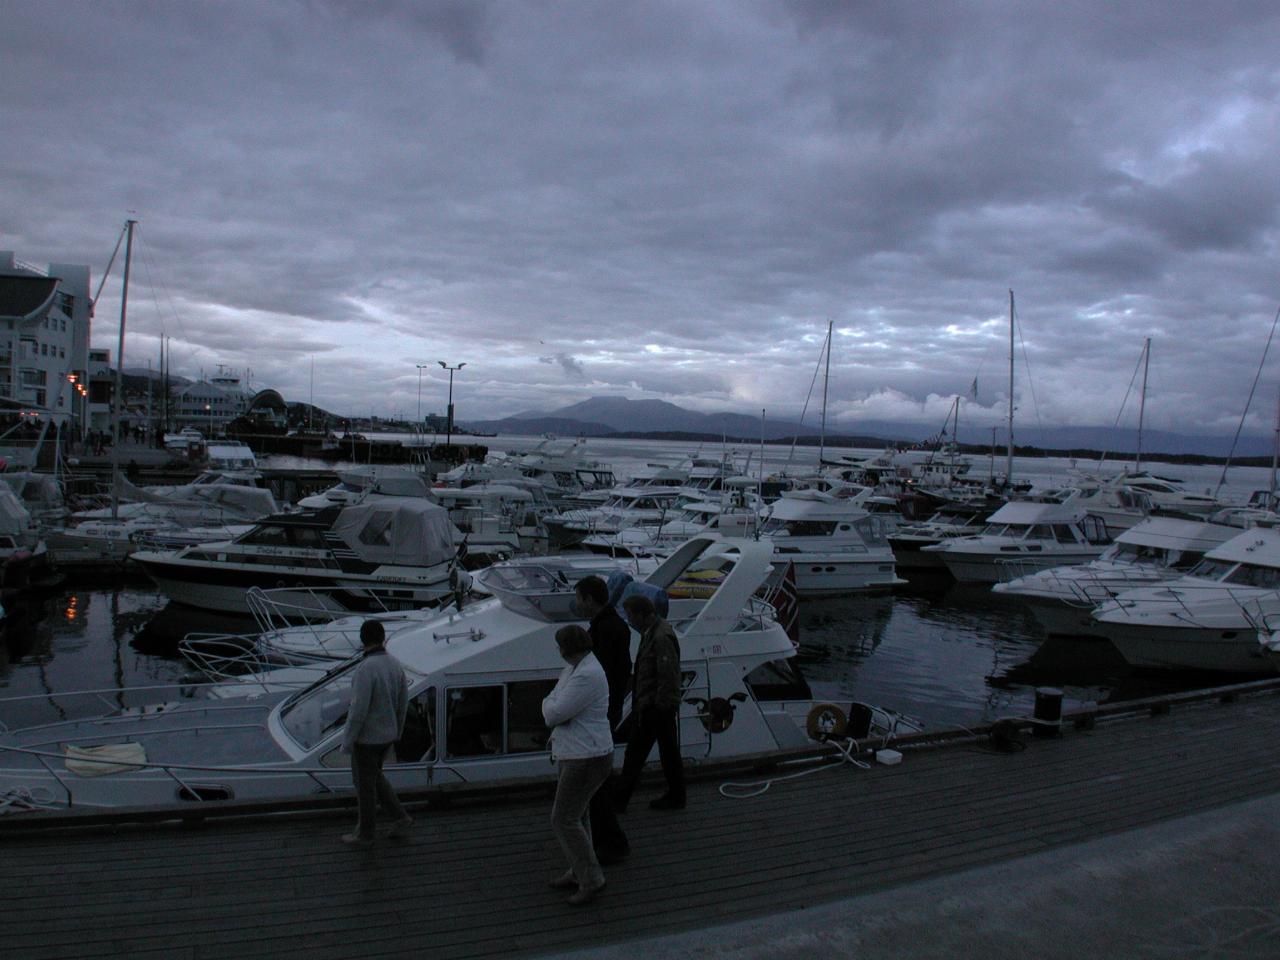 KPLU Viking Jazz: Boats in the yacht basin at Molde